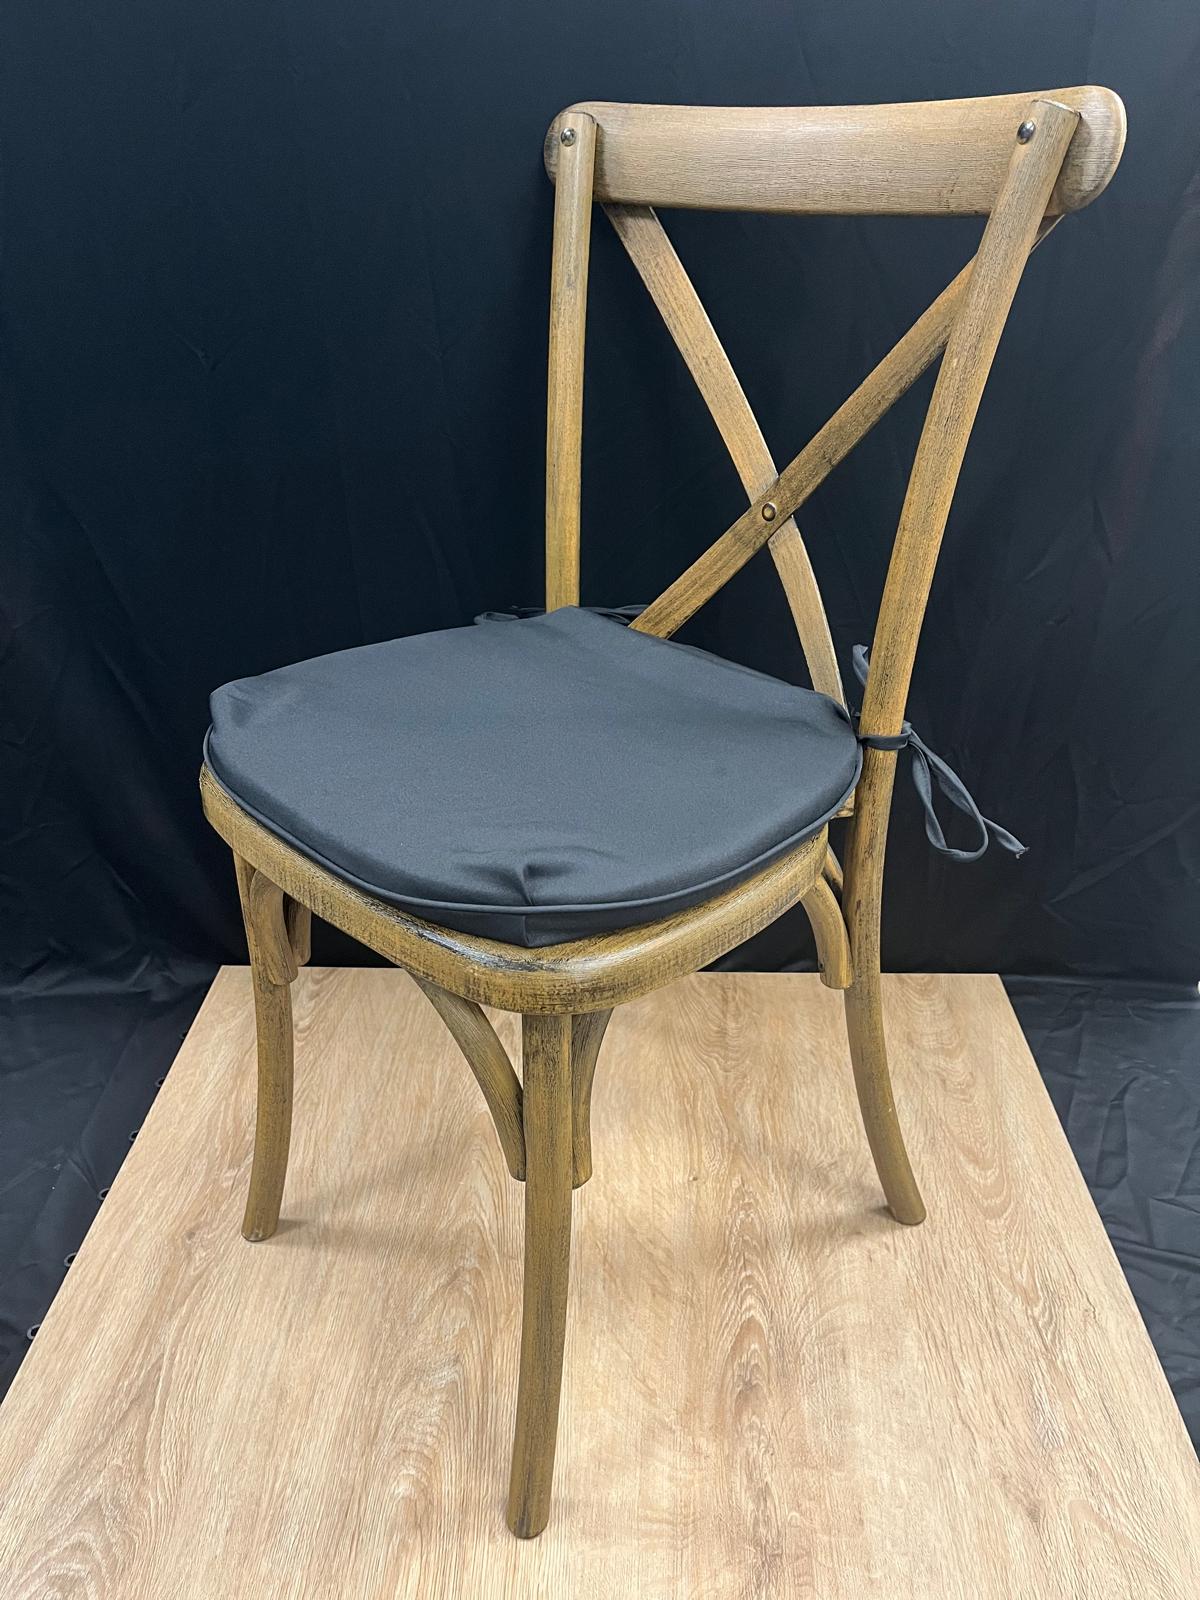 Chair Cushion, Black W/Tie for Crossback